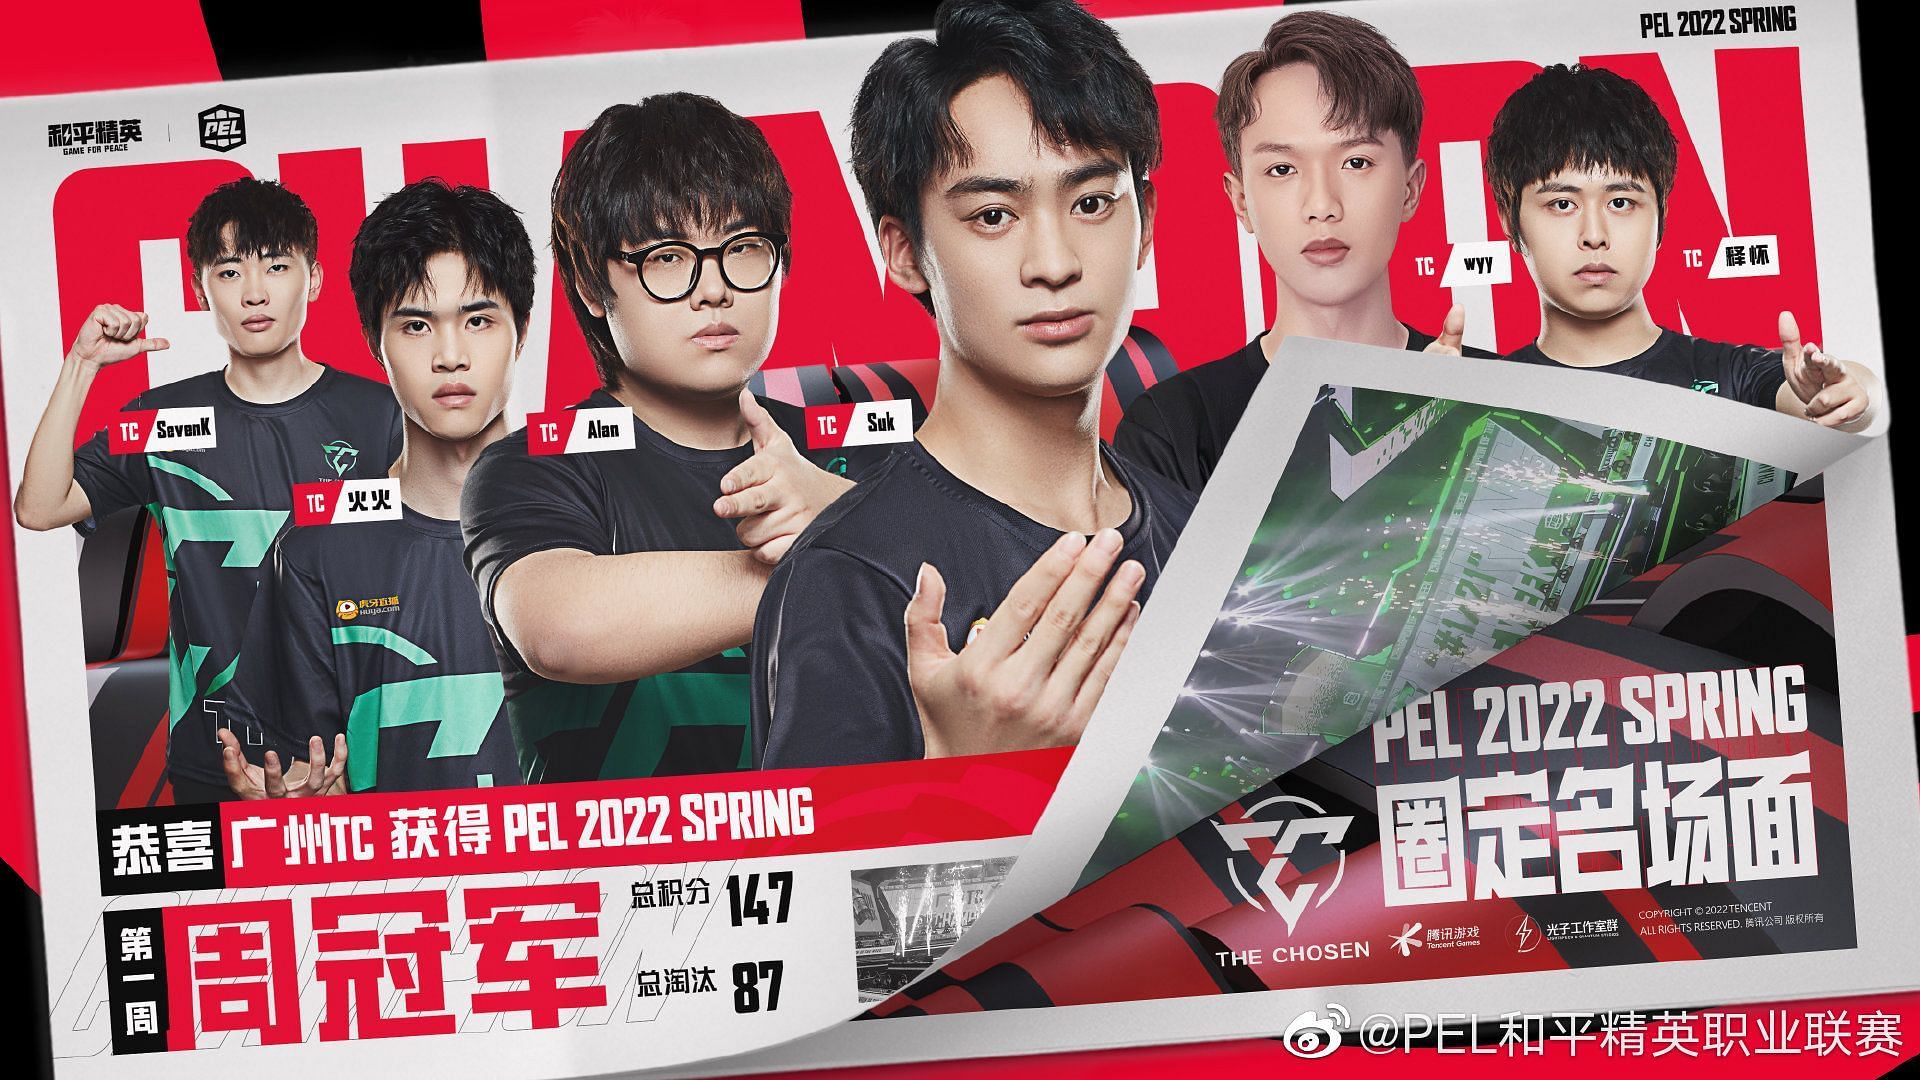 TC crowned champion of PEL 2022 Spring Week 1 (Image via Tencent)